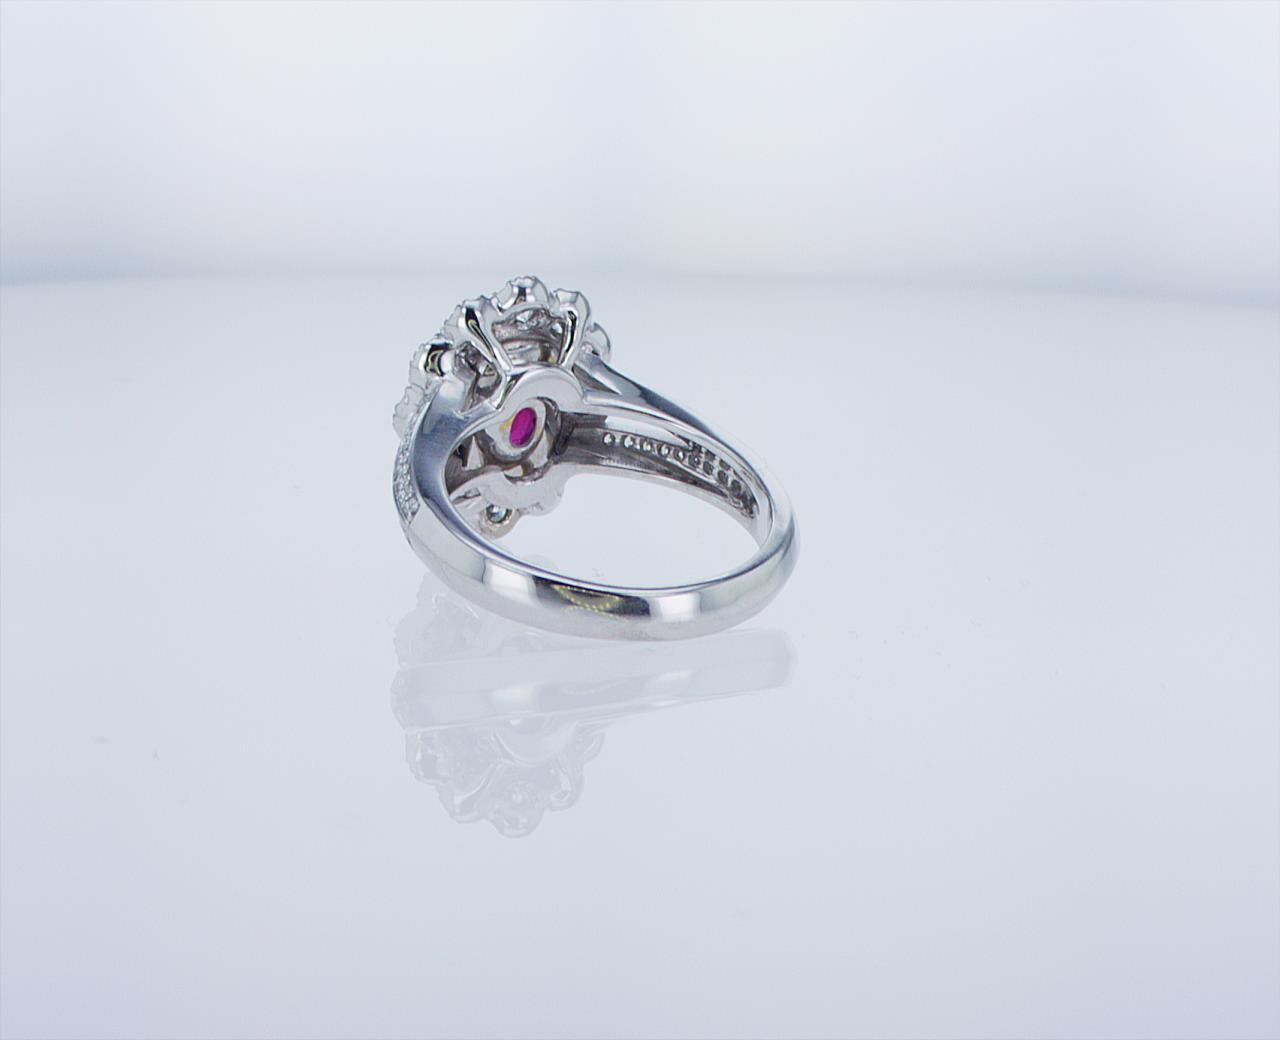 2.03 Carat Oval Thai Ruby Ring W/1.08 Carat TW of Diamonds in 18k WG W/Palladium For Sale 2